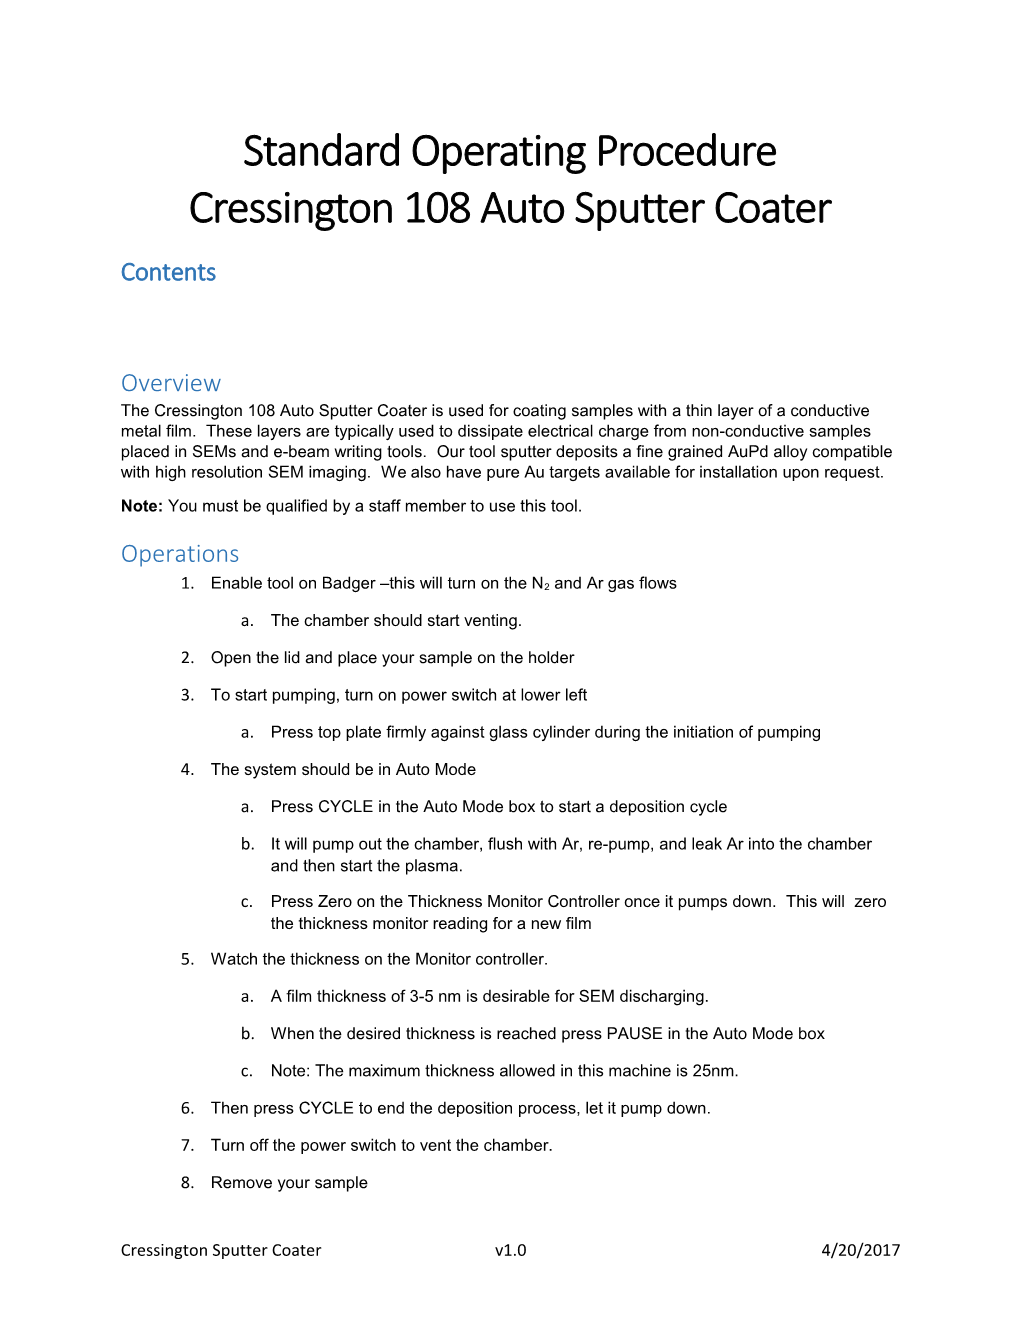 Cressington 108 Auto Sputter Coater